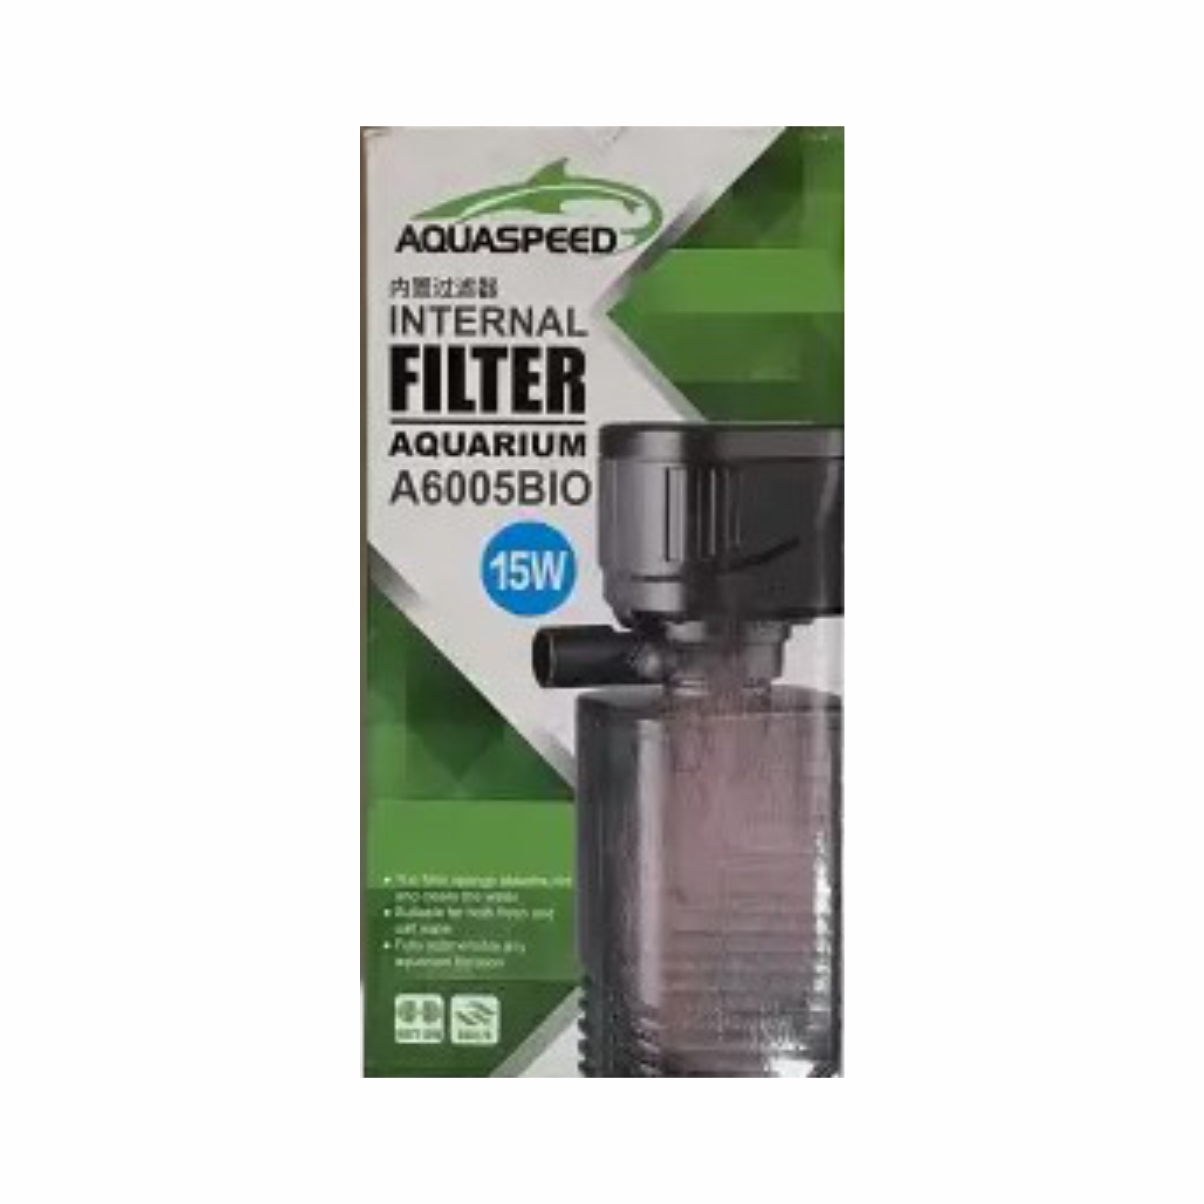 AQUASPEED Internal Filter Aquarium A6005BIO, 15W